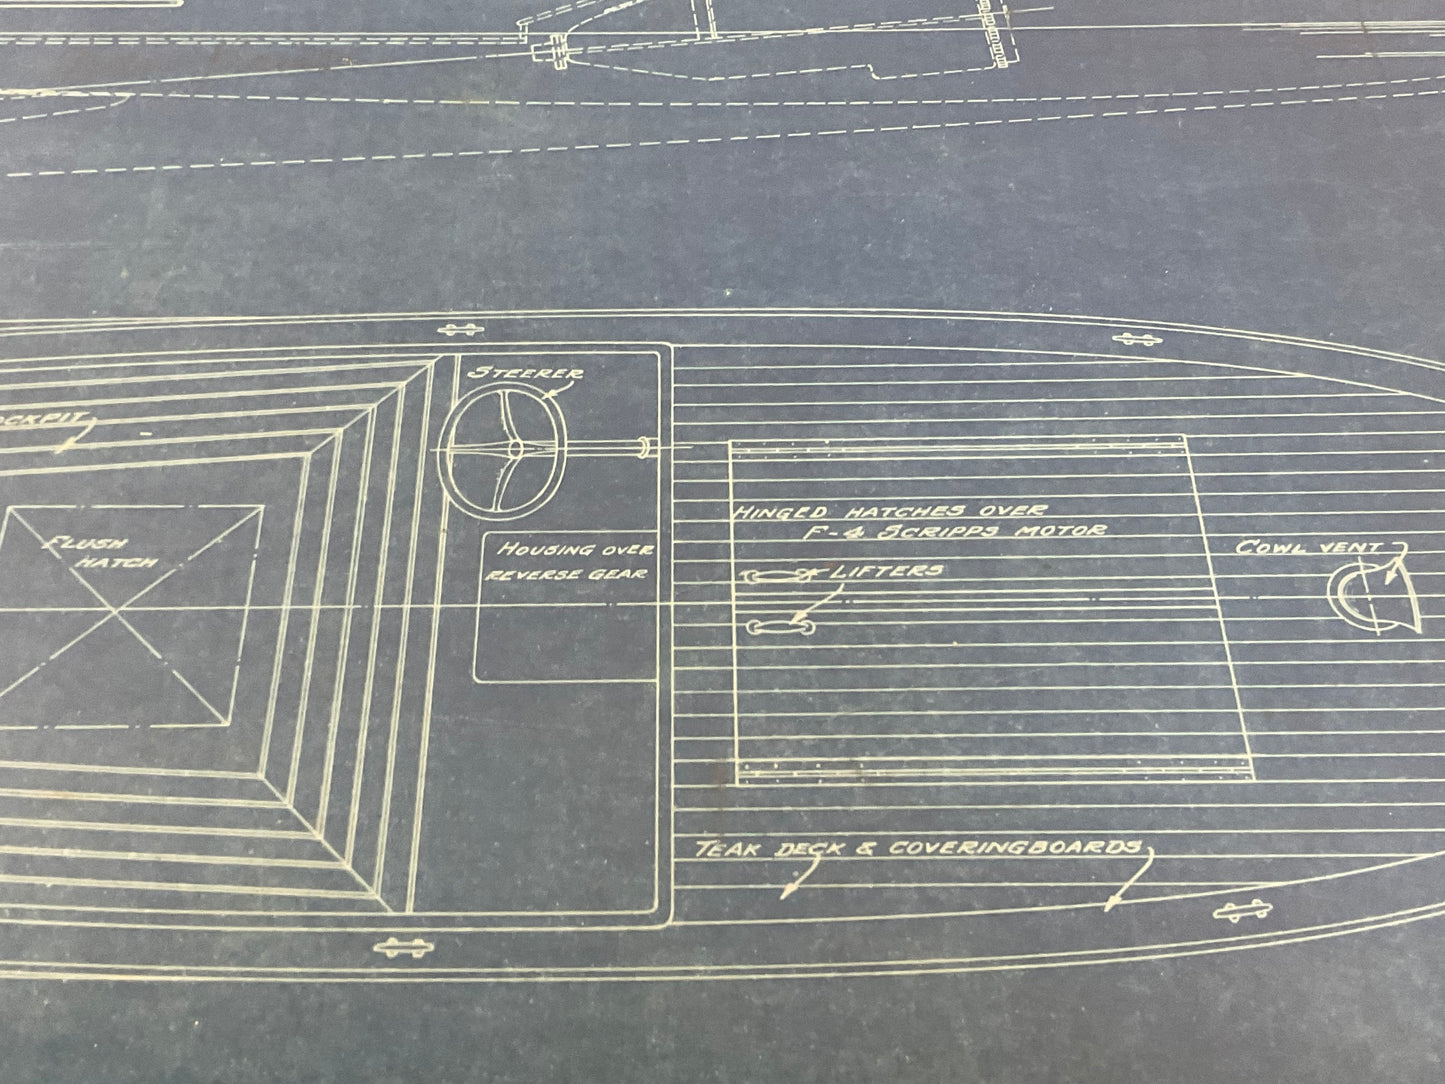 1927 Boat Blueprint by Benjamin Dobson - Lannan Gallery